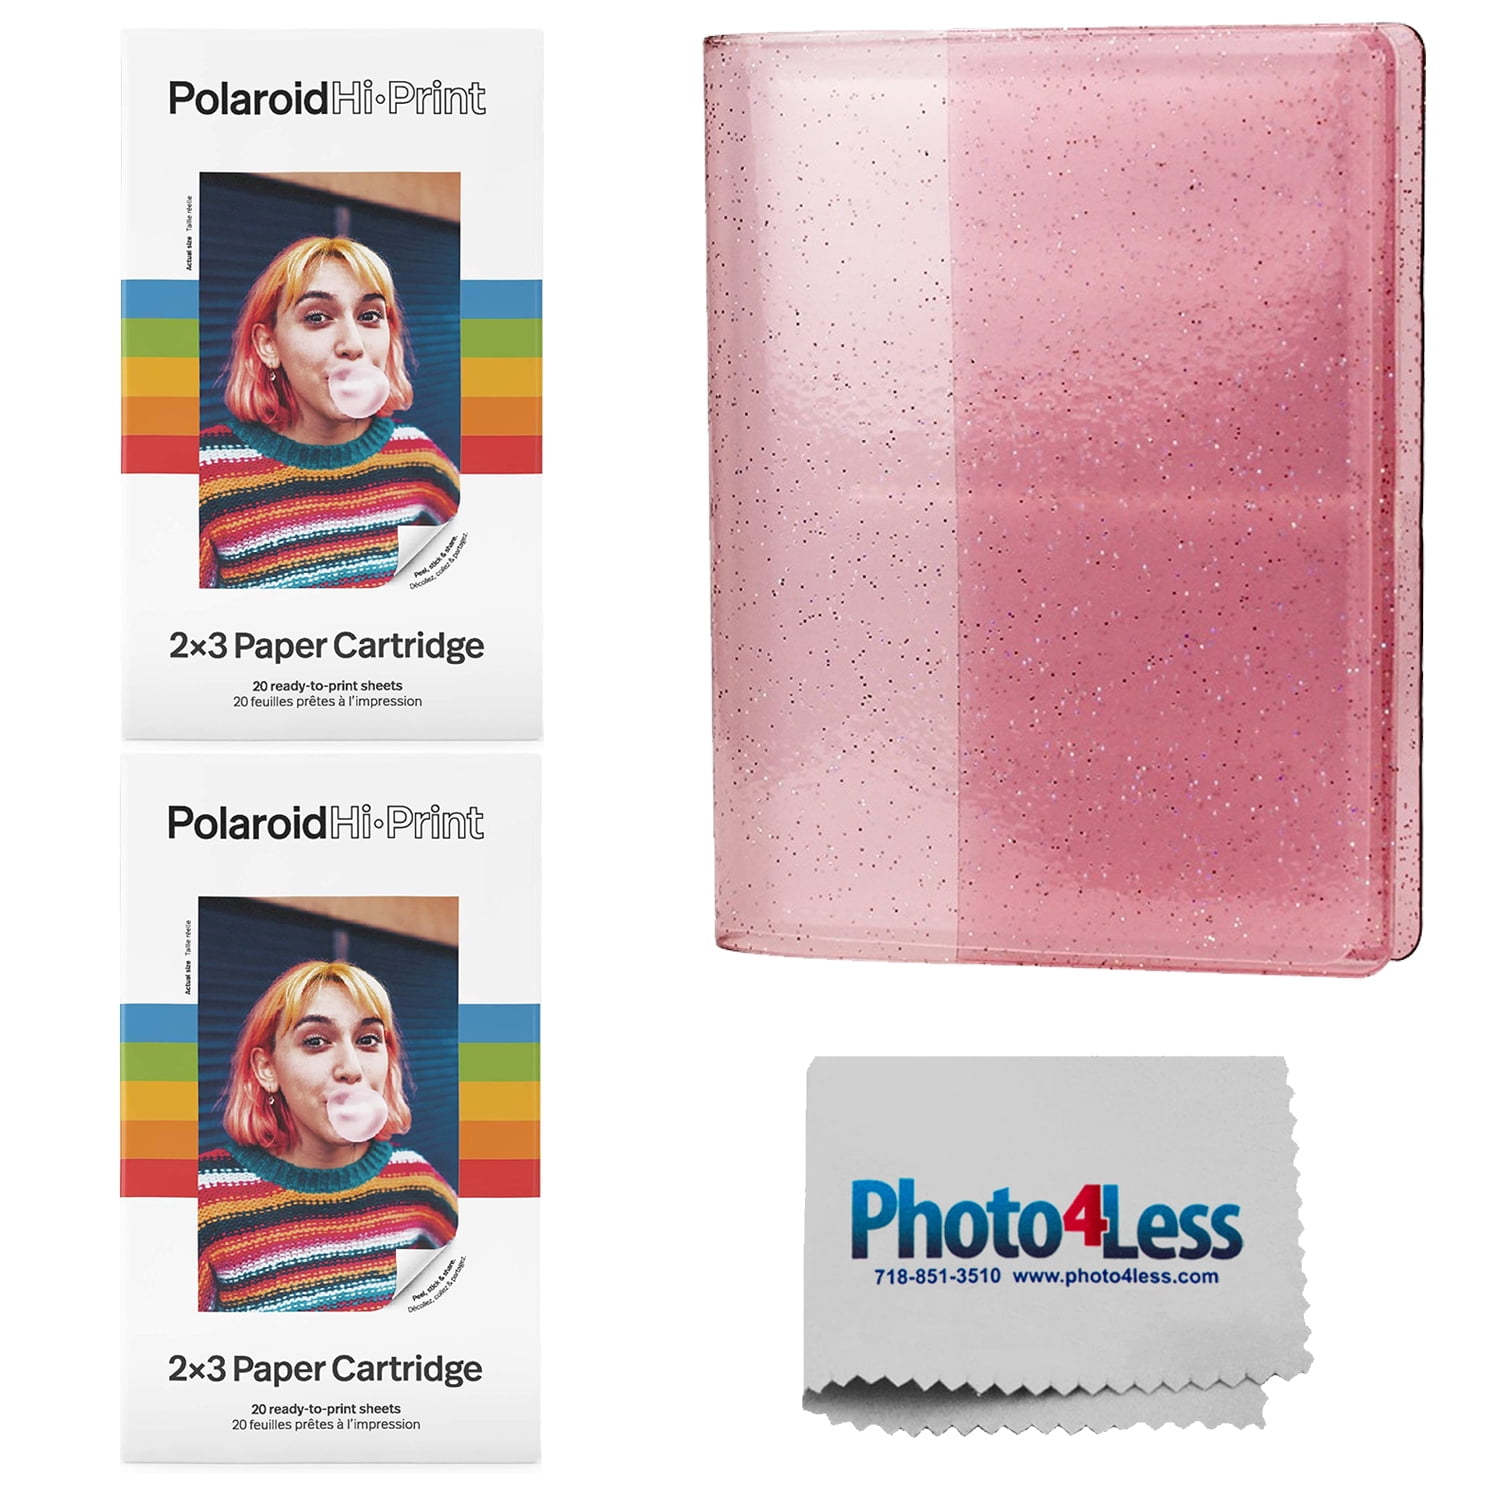 Polaroid Hi-Print 2X3 Paper Cartridge 40 sheets + Album Holds 64 Photos 